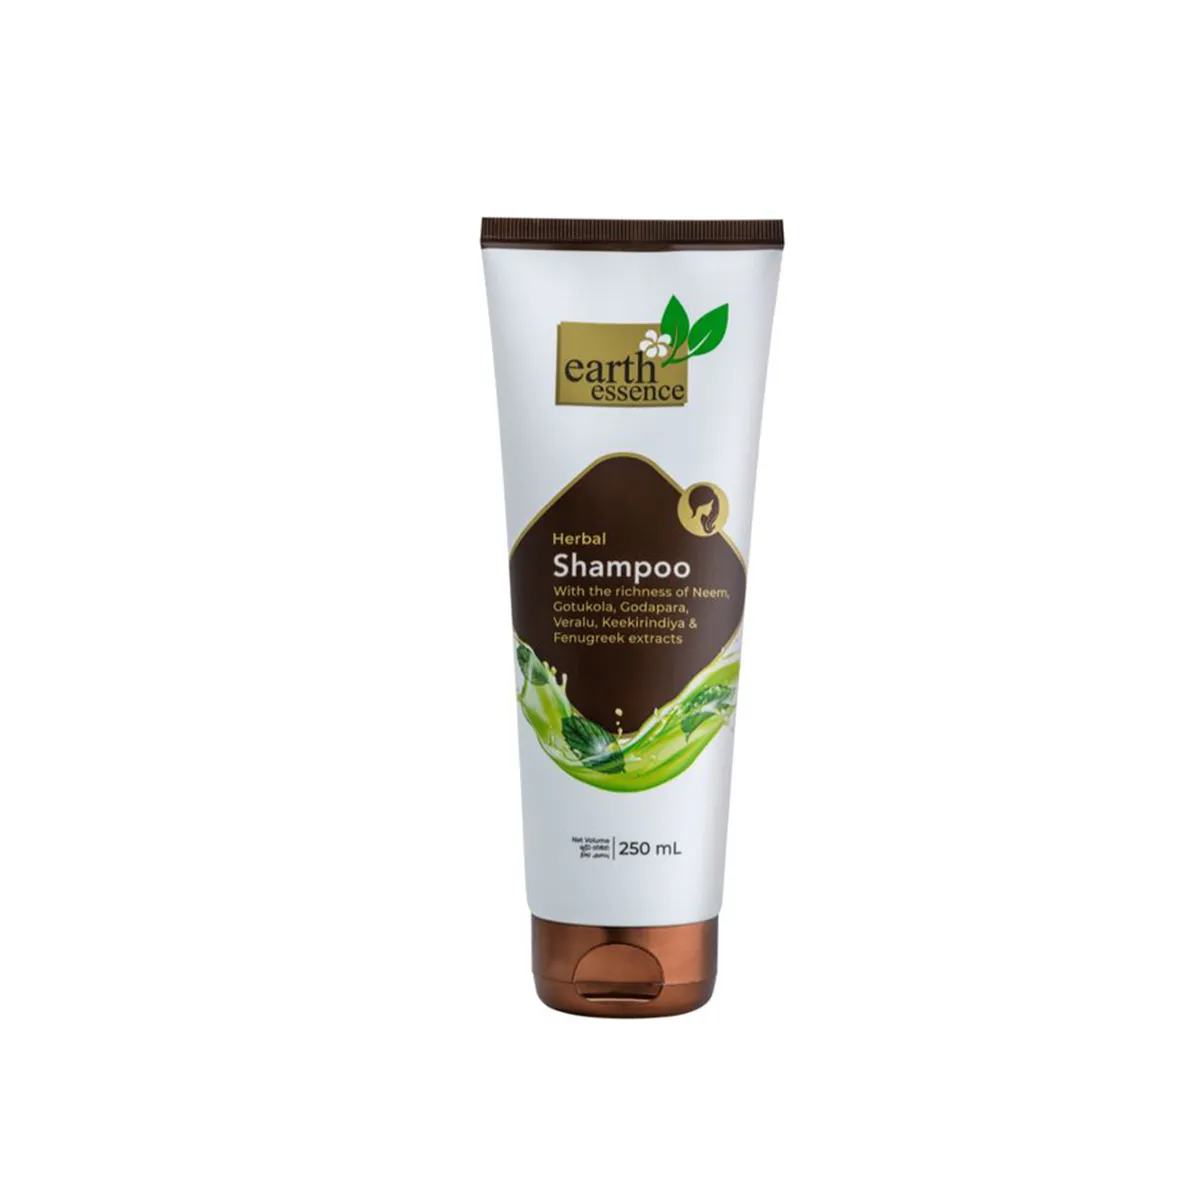 Earth Essence Herbal Shampoo 250ml